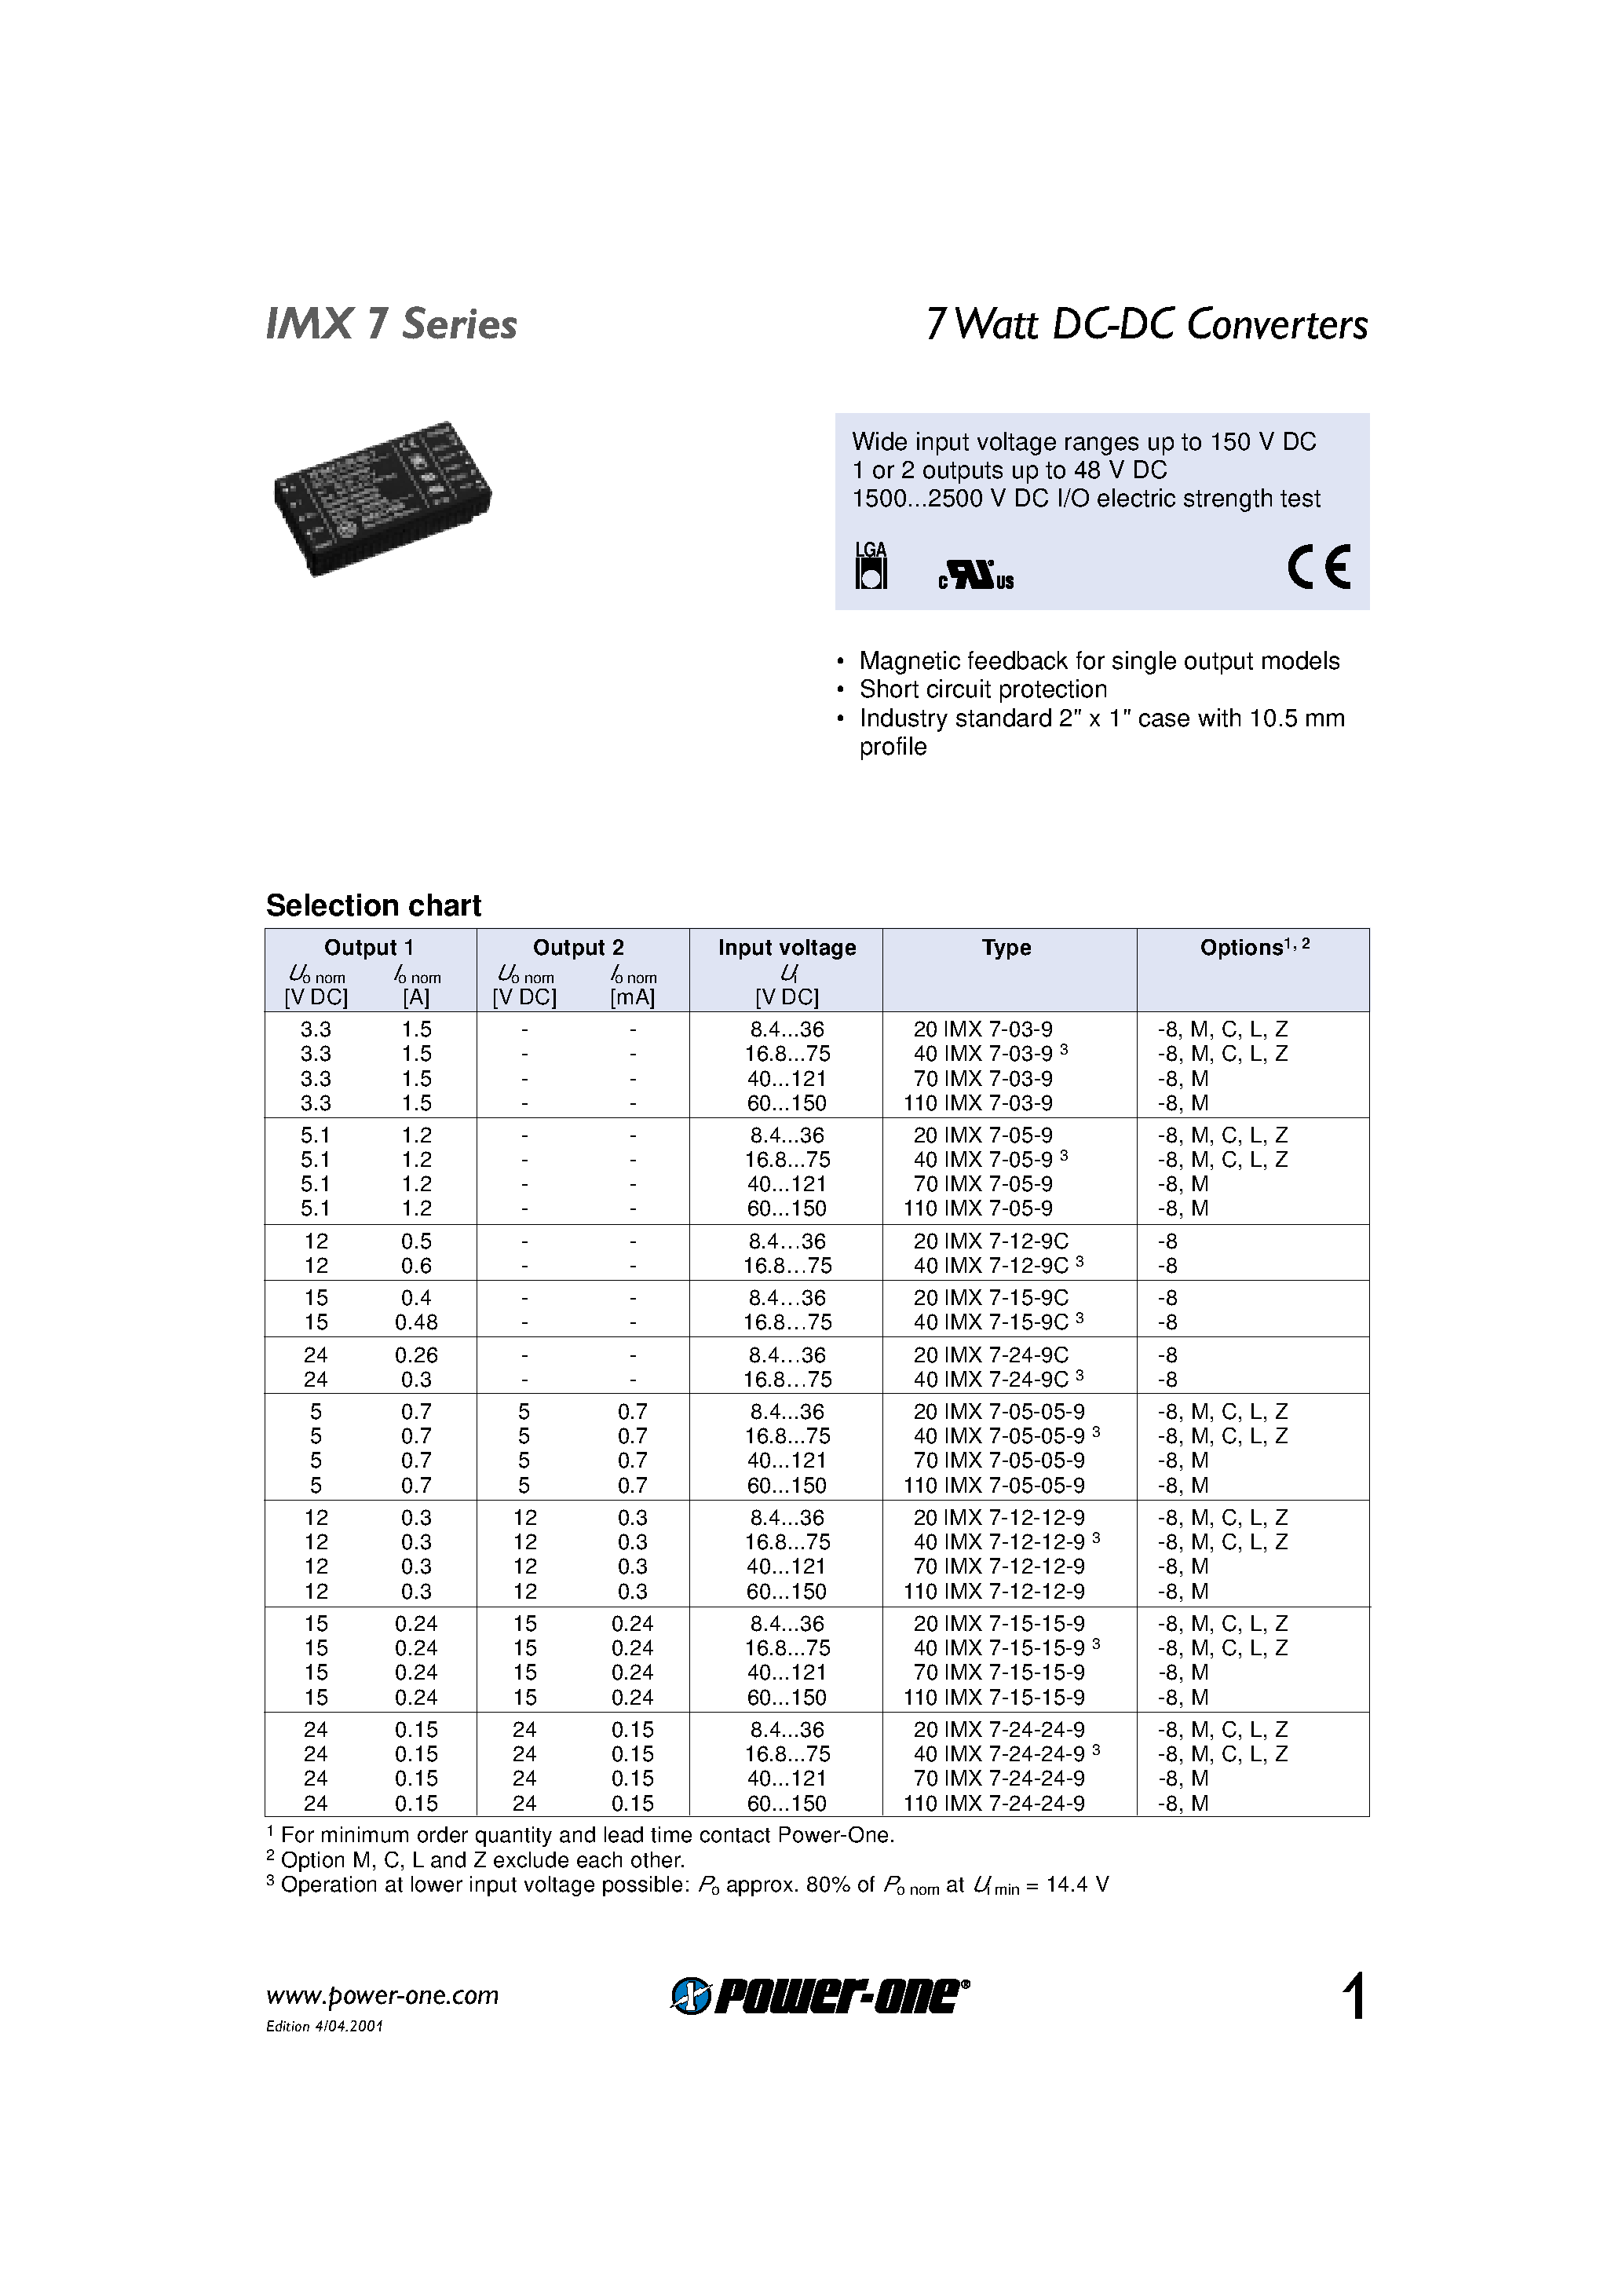 Datasheet 40IMX7-03-9 - 7 Watt DC-DC Converters page 1